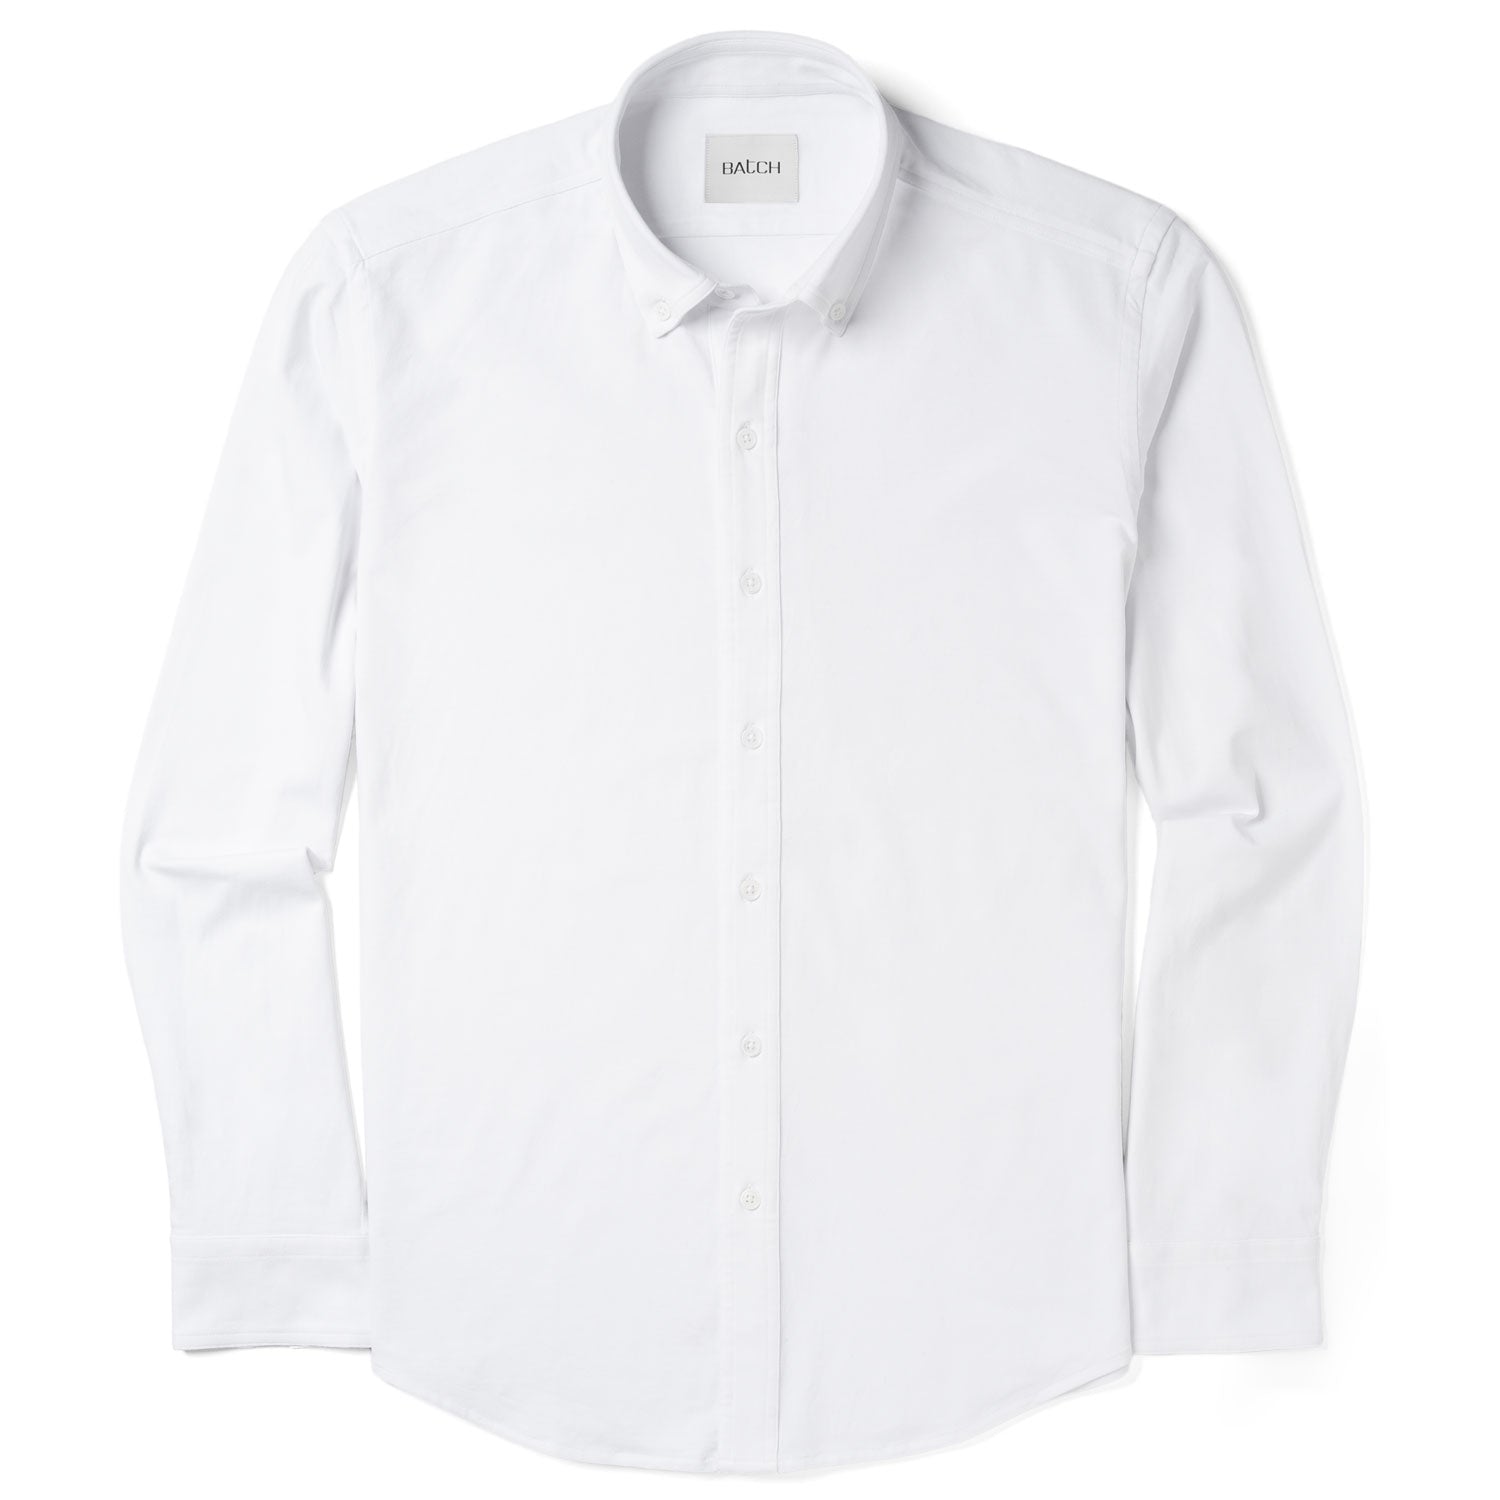 Essential BDC T-Shirt Shirt - Pure White Cotton Span Jersey